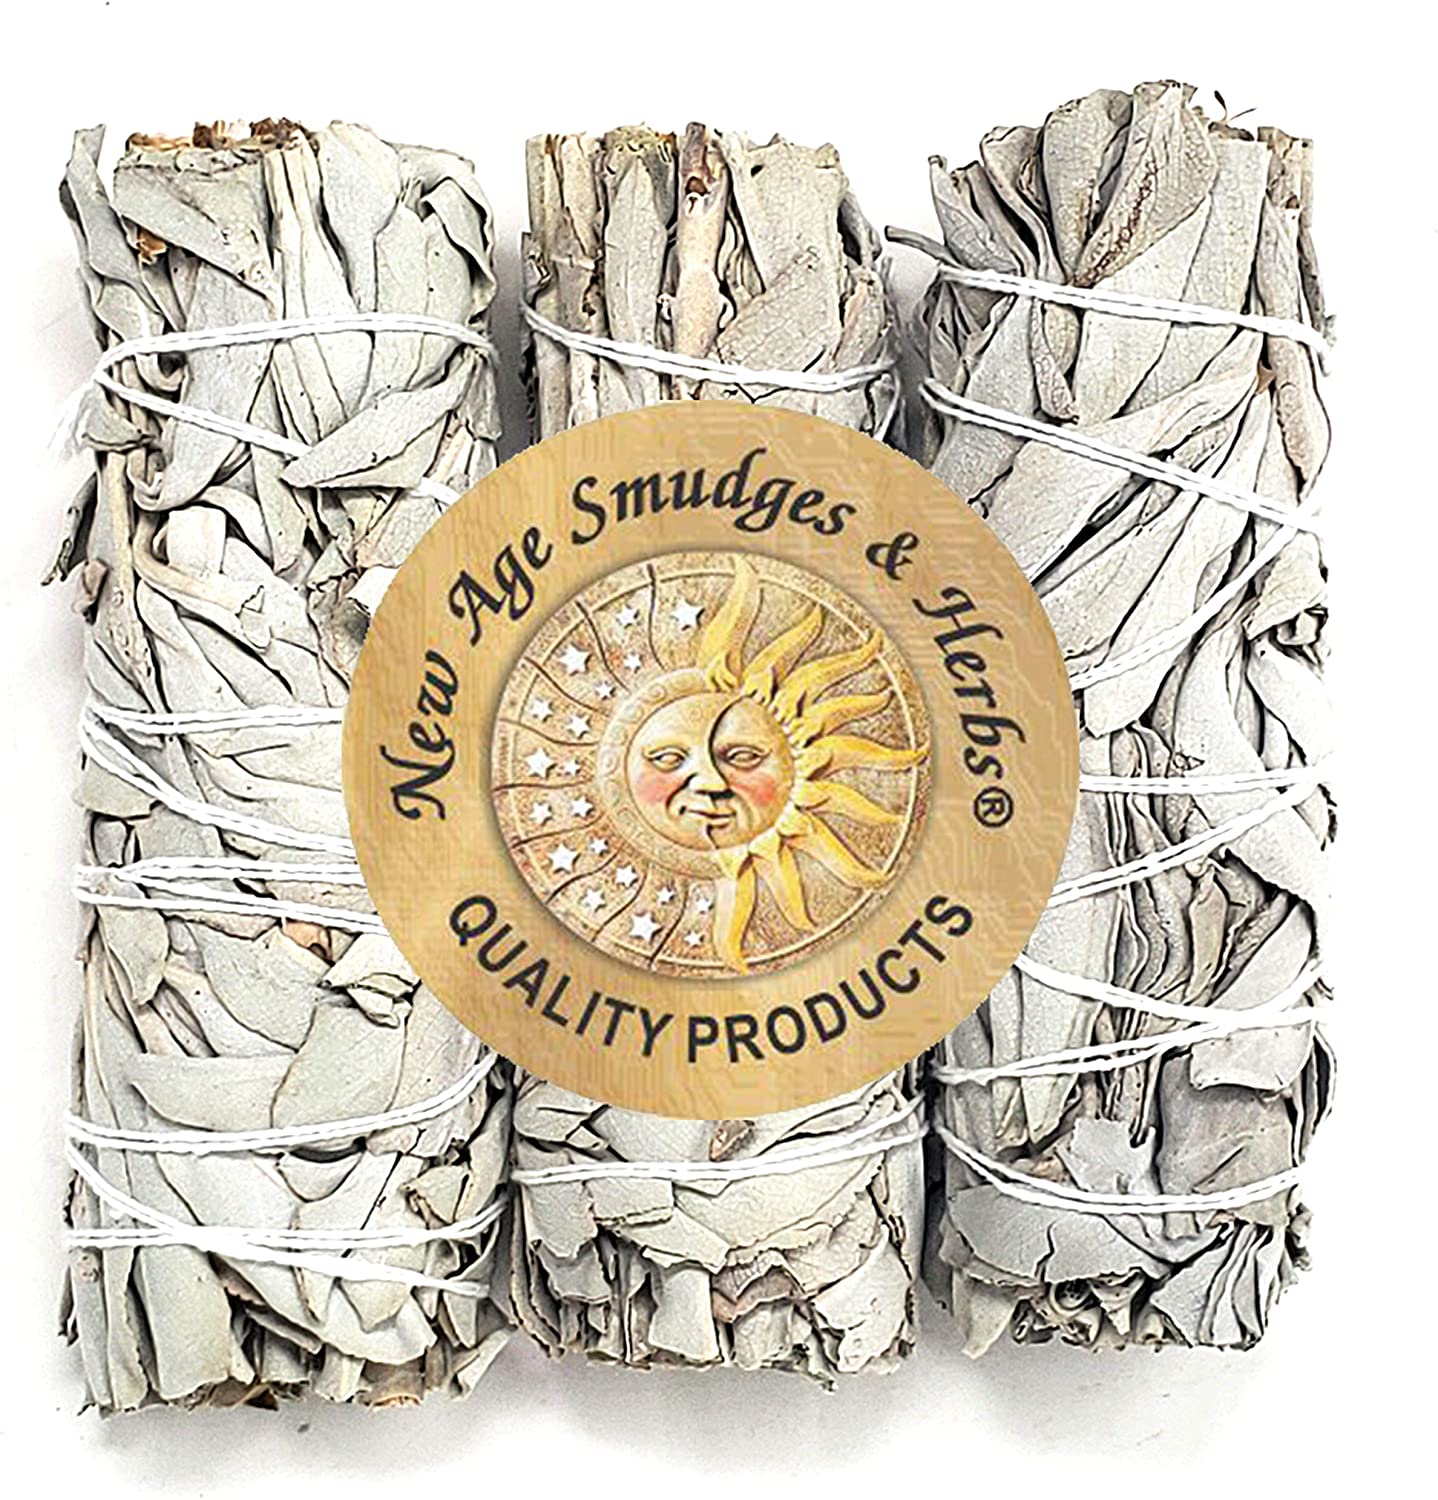 New Age Smudges & Herbs - Premium California White Sage 